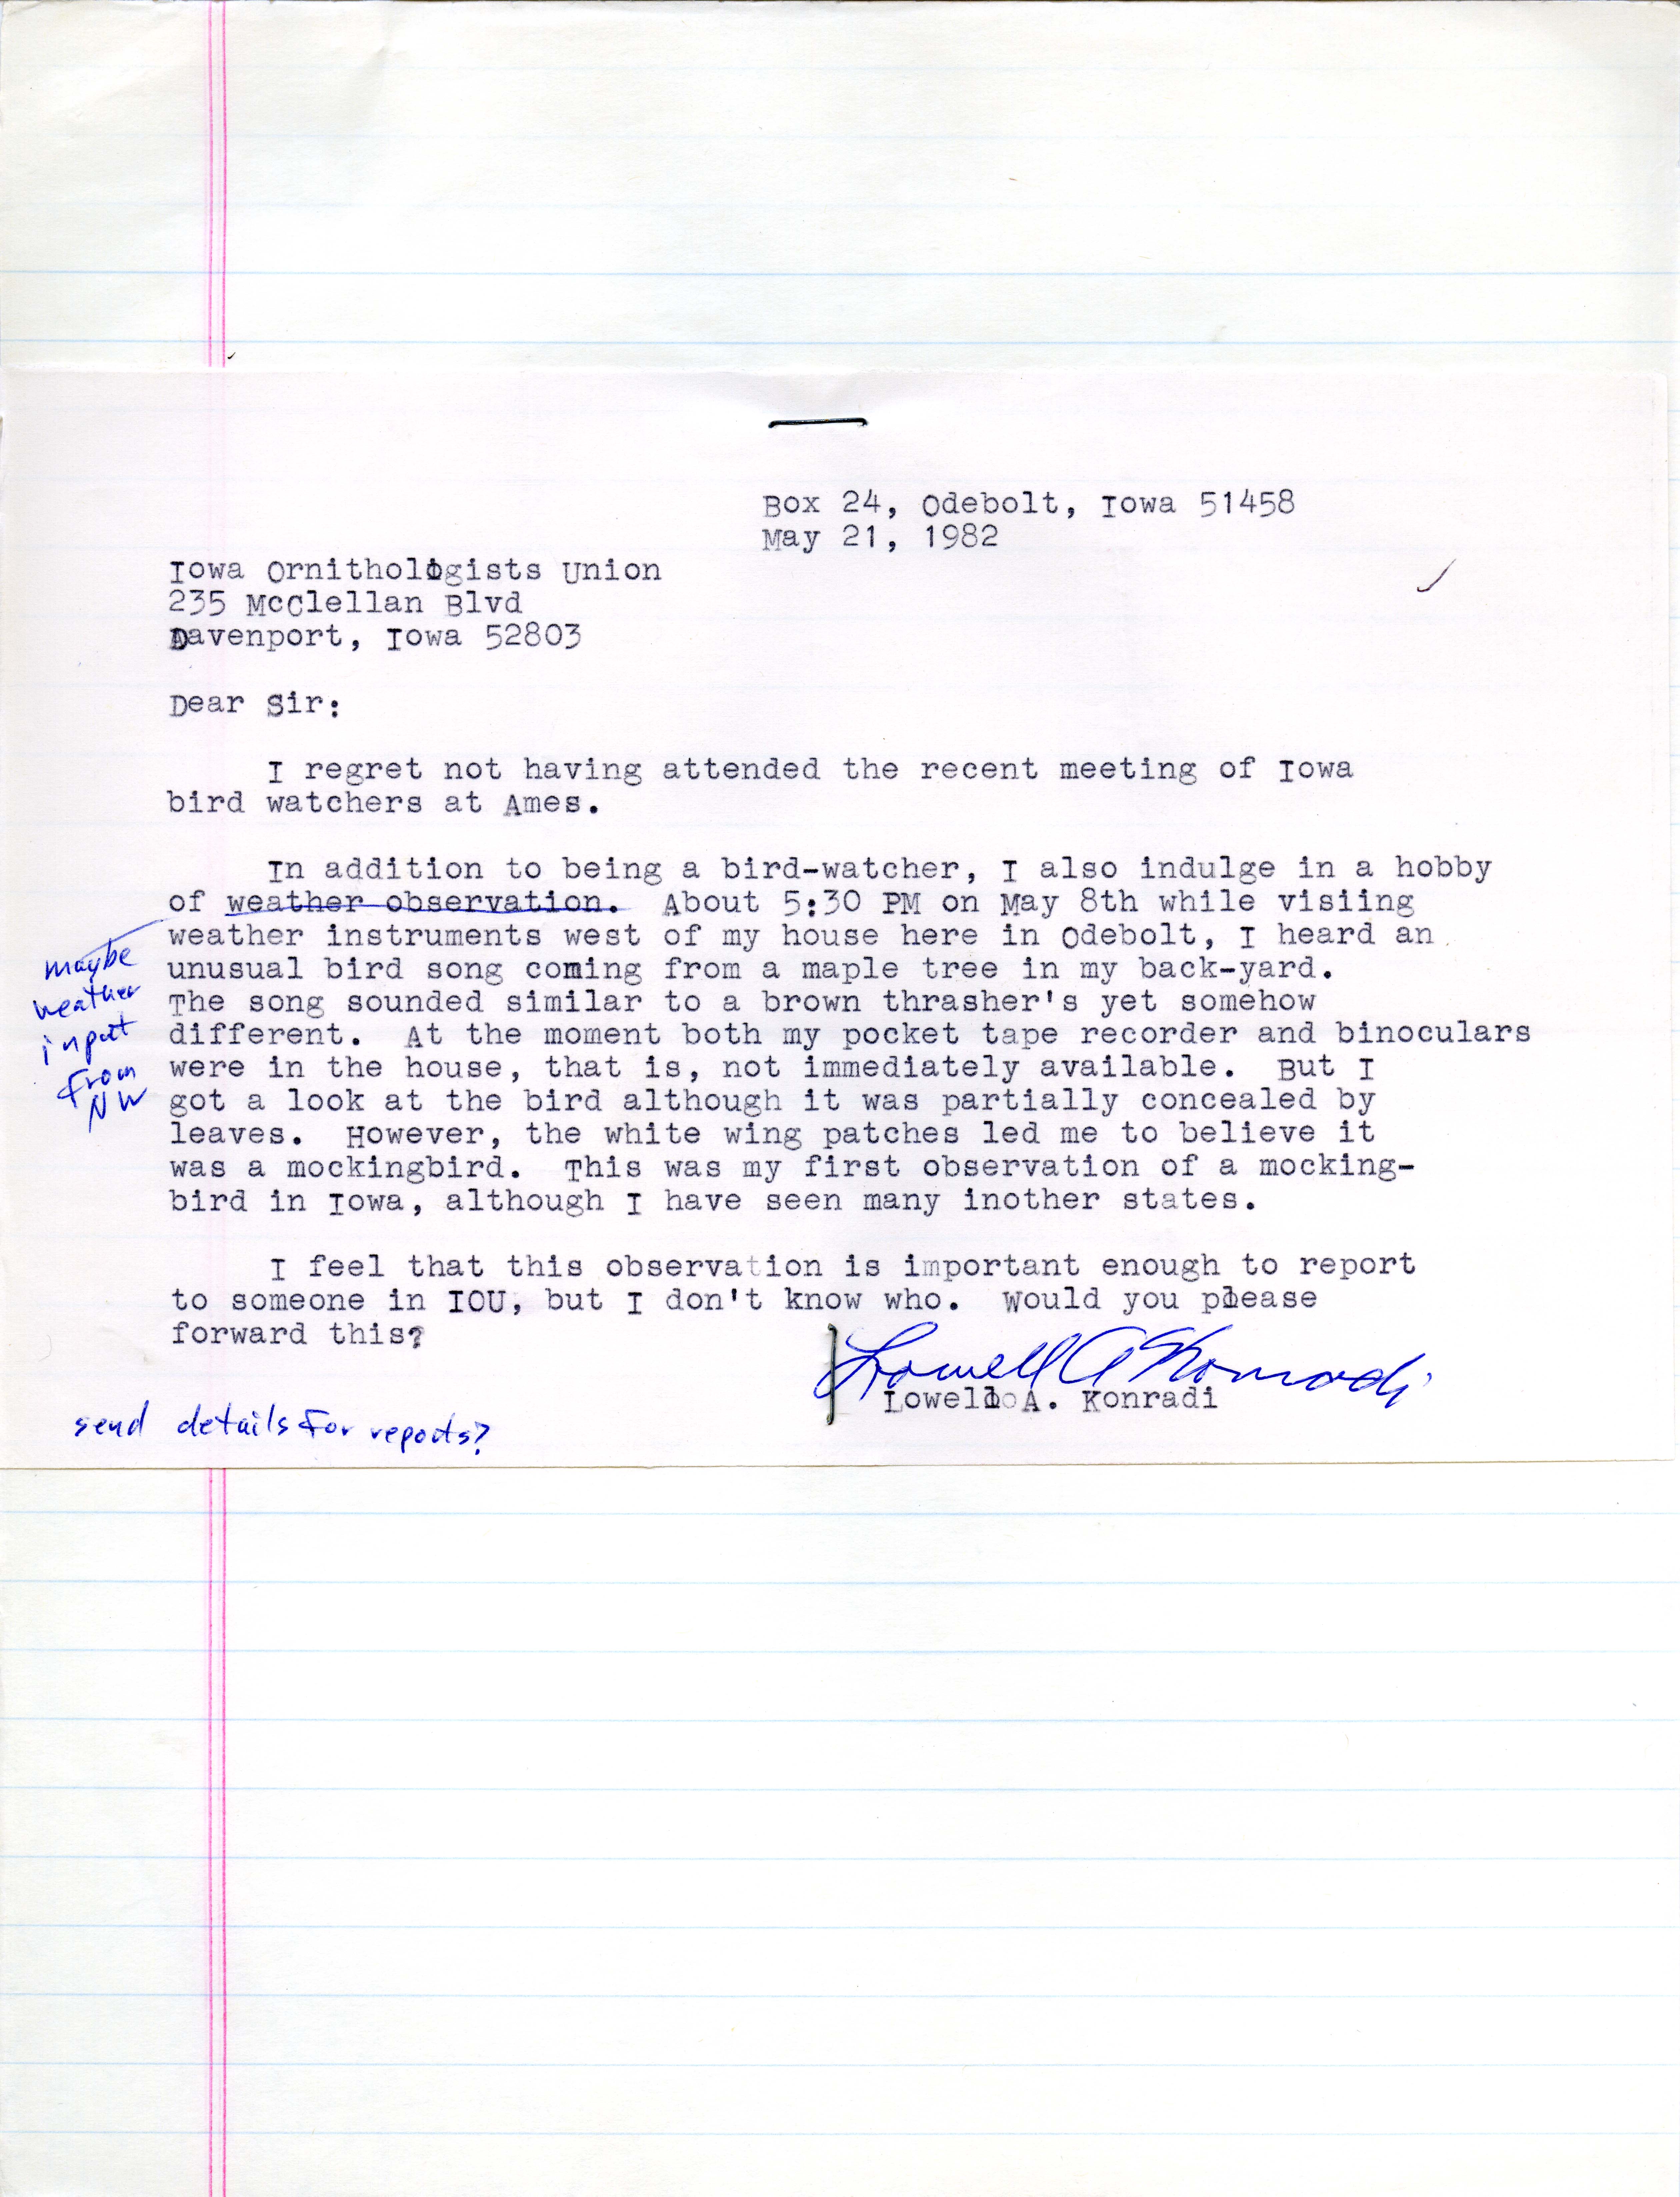 Lowell A. Konradi letter to the Iowa Ornithologists' Union regarding field notes, May 21, 1982